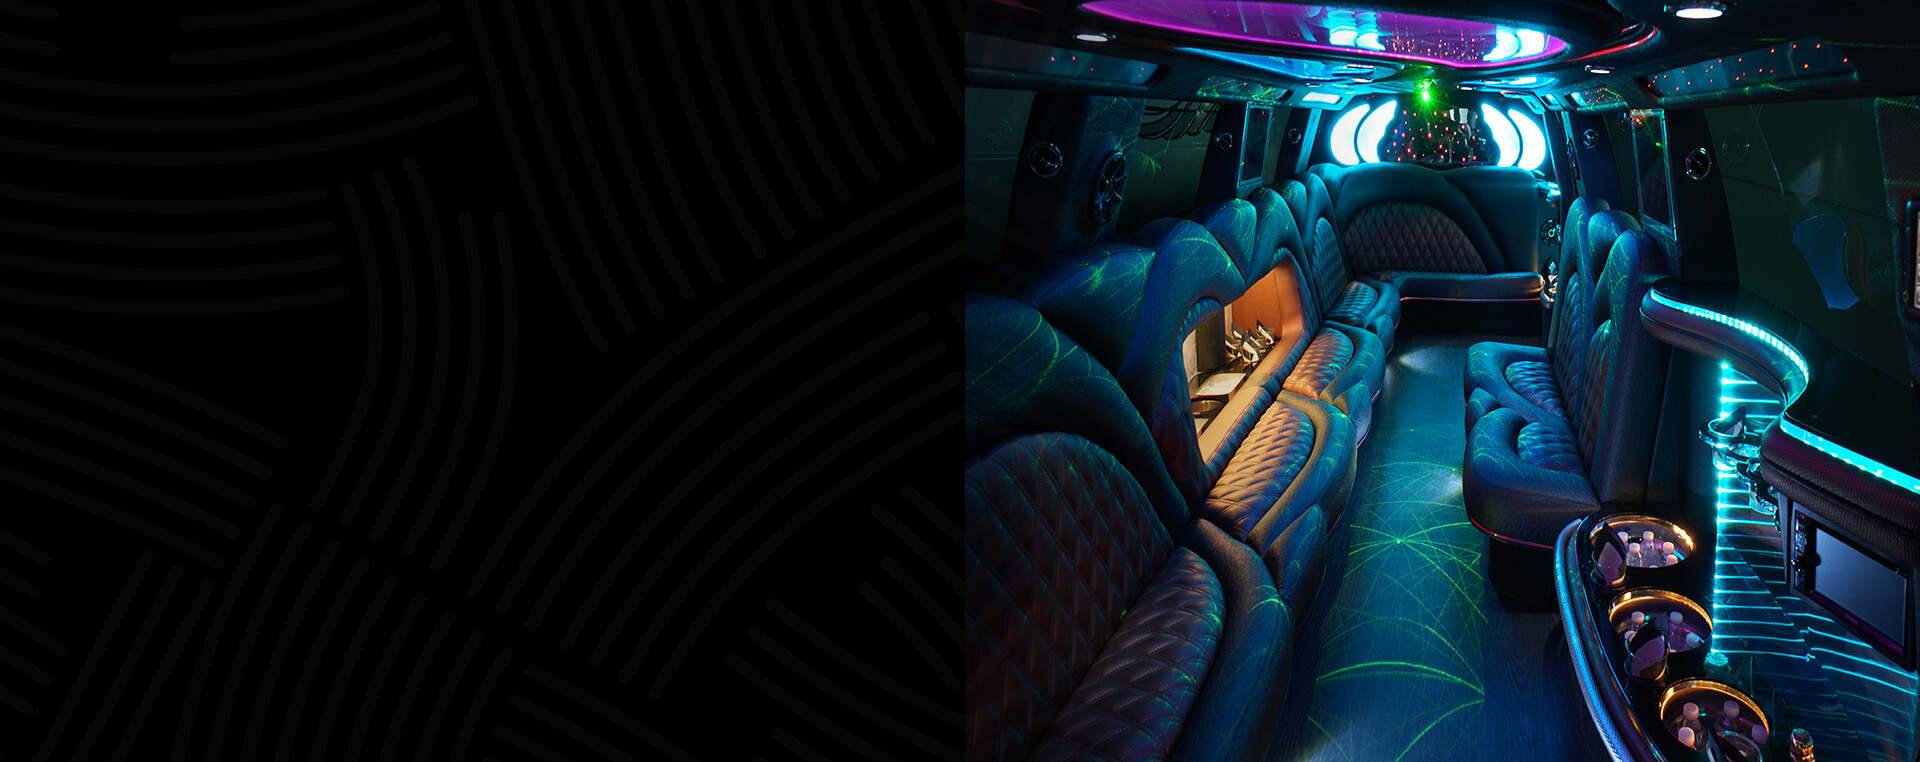 Inside a Santa Fe limousine